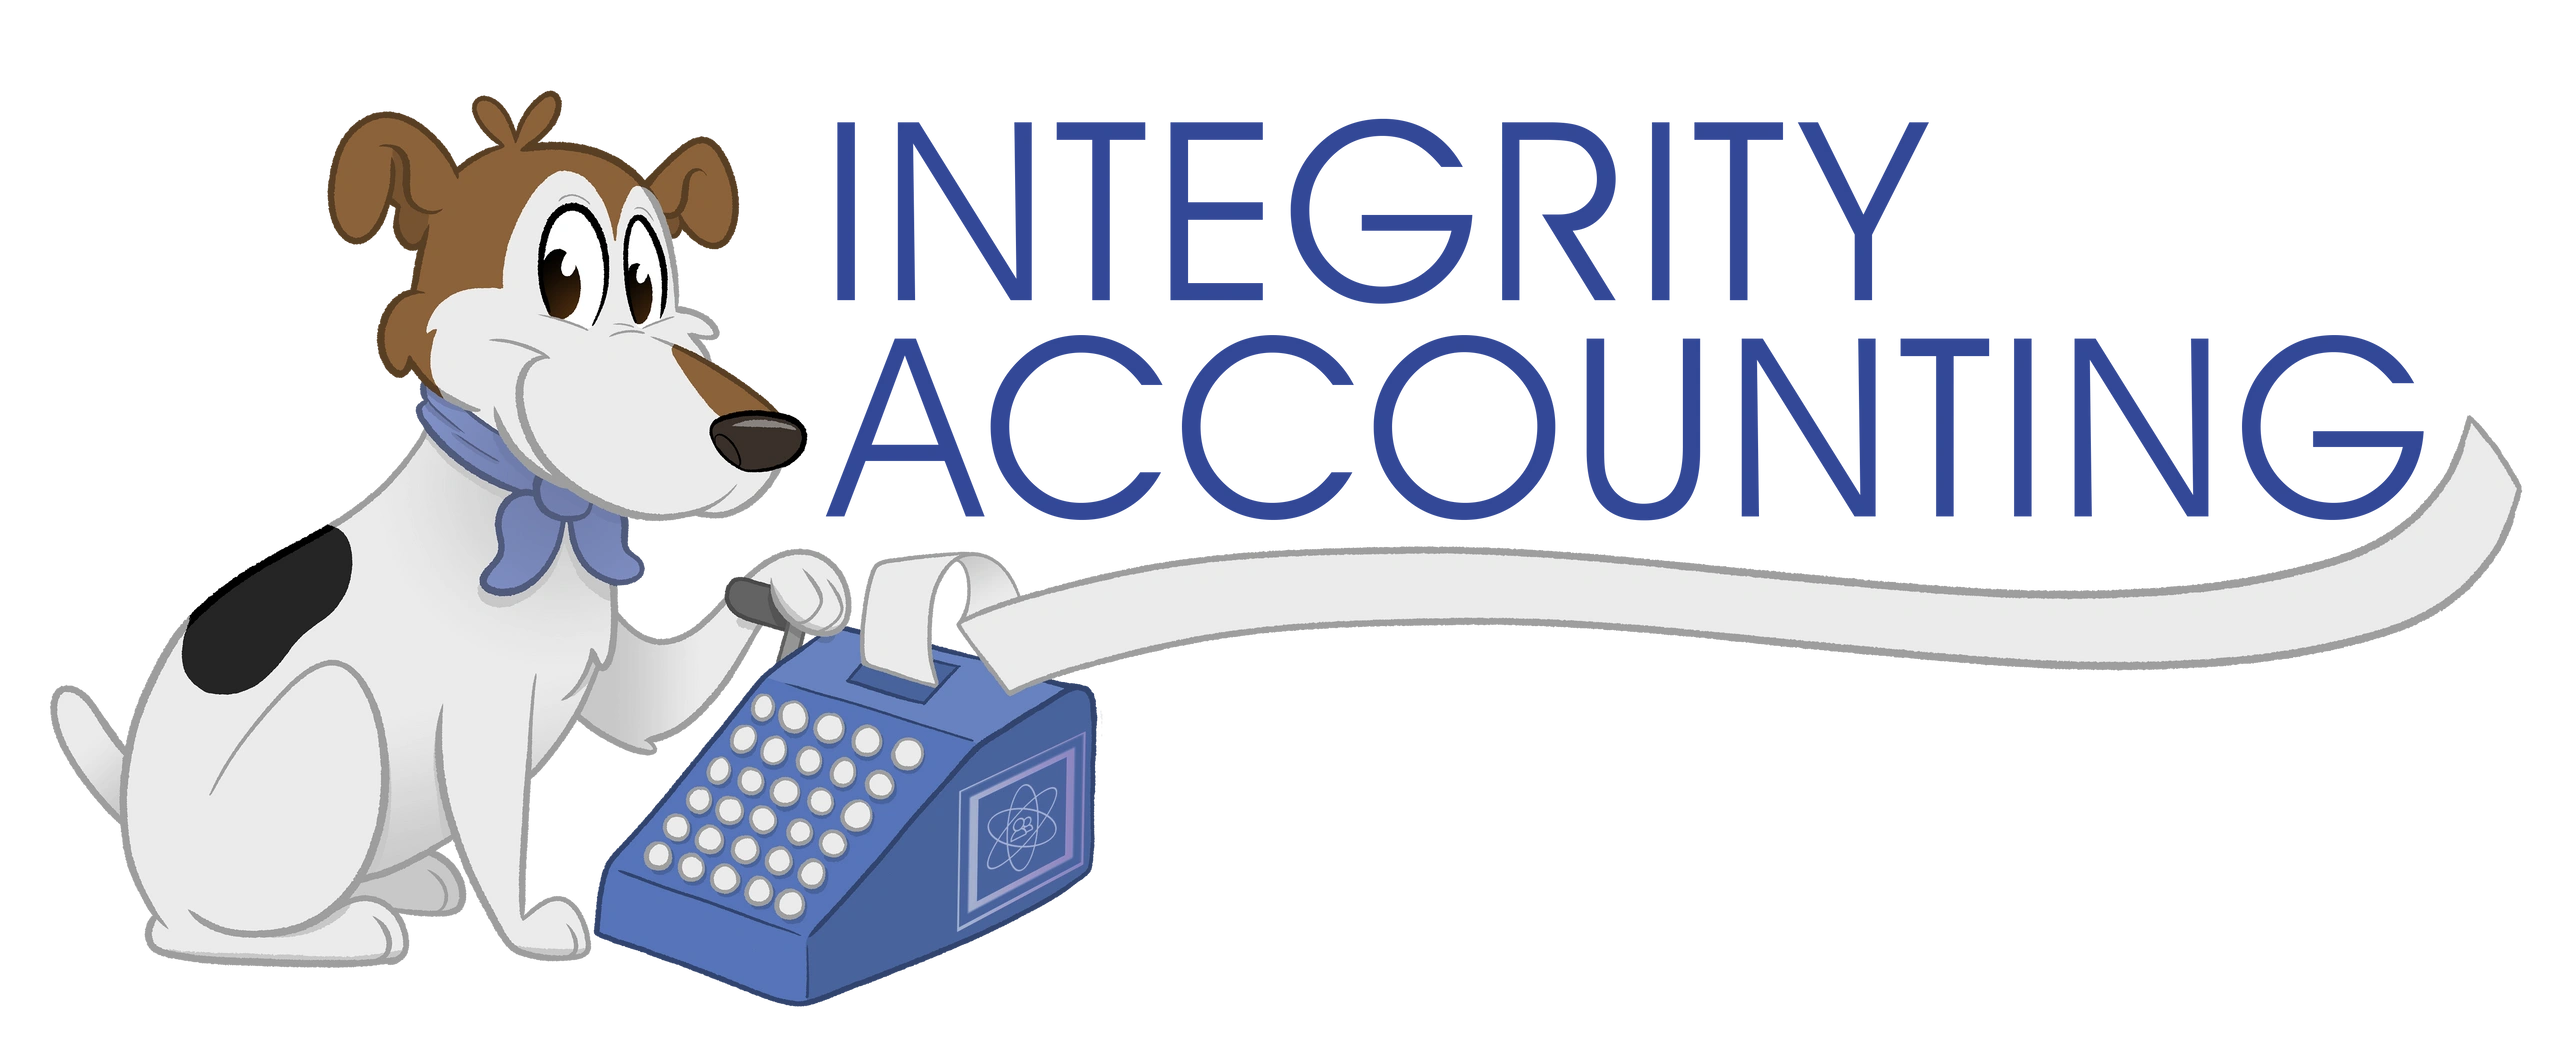 integrity bookkeeping